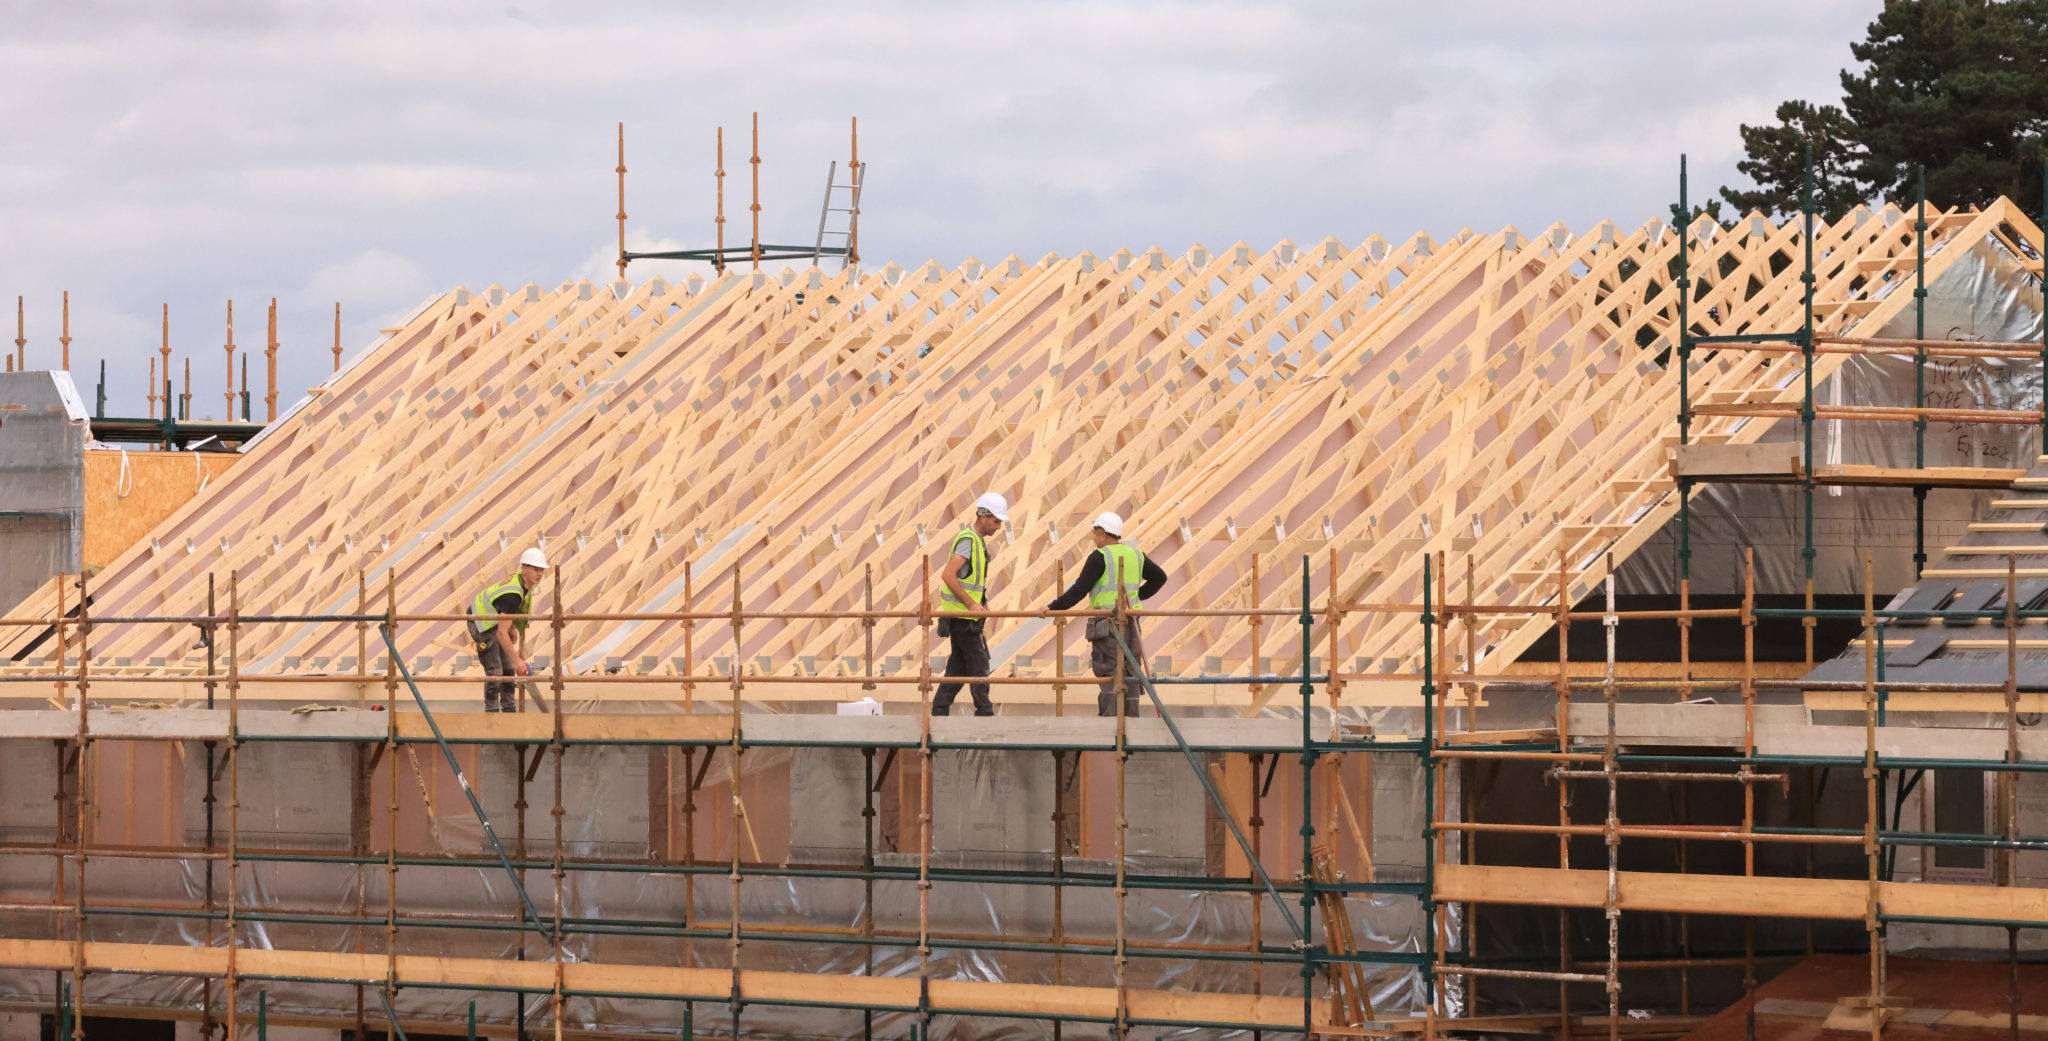 A housing development in Newbridge, County Kildare, 16-09-2021. Image: Eamonn Farrell/RollingNews